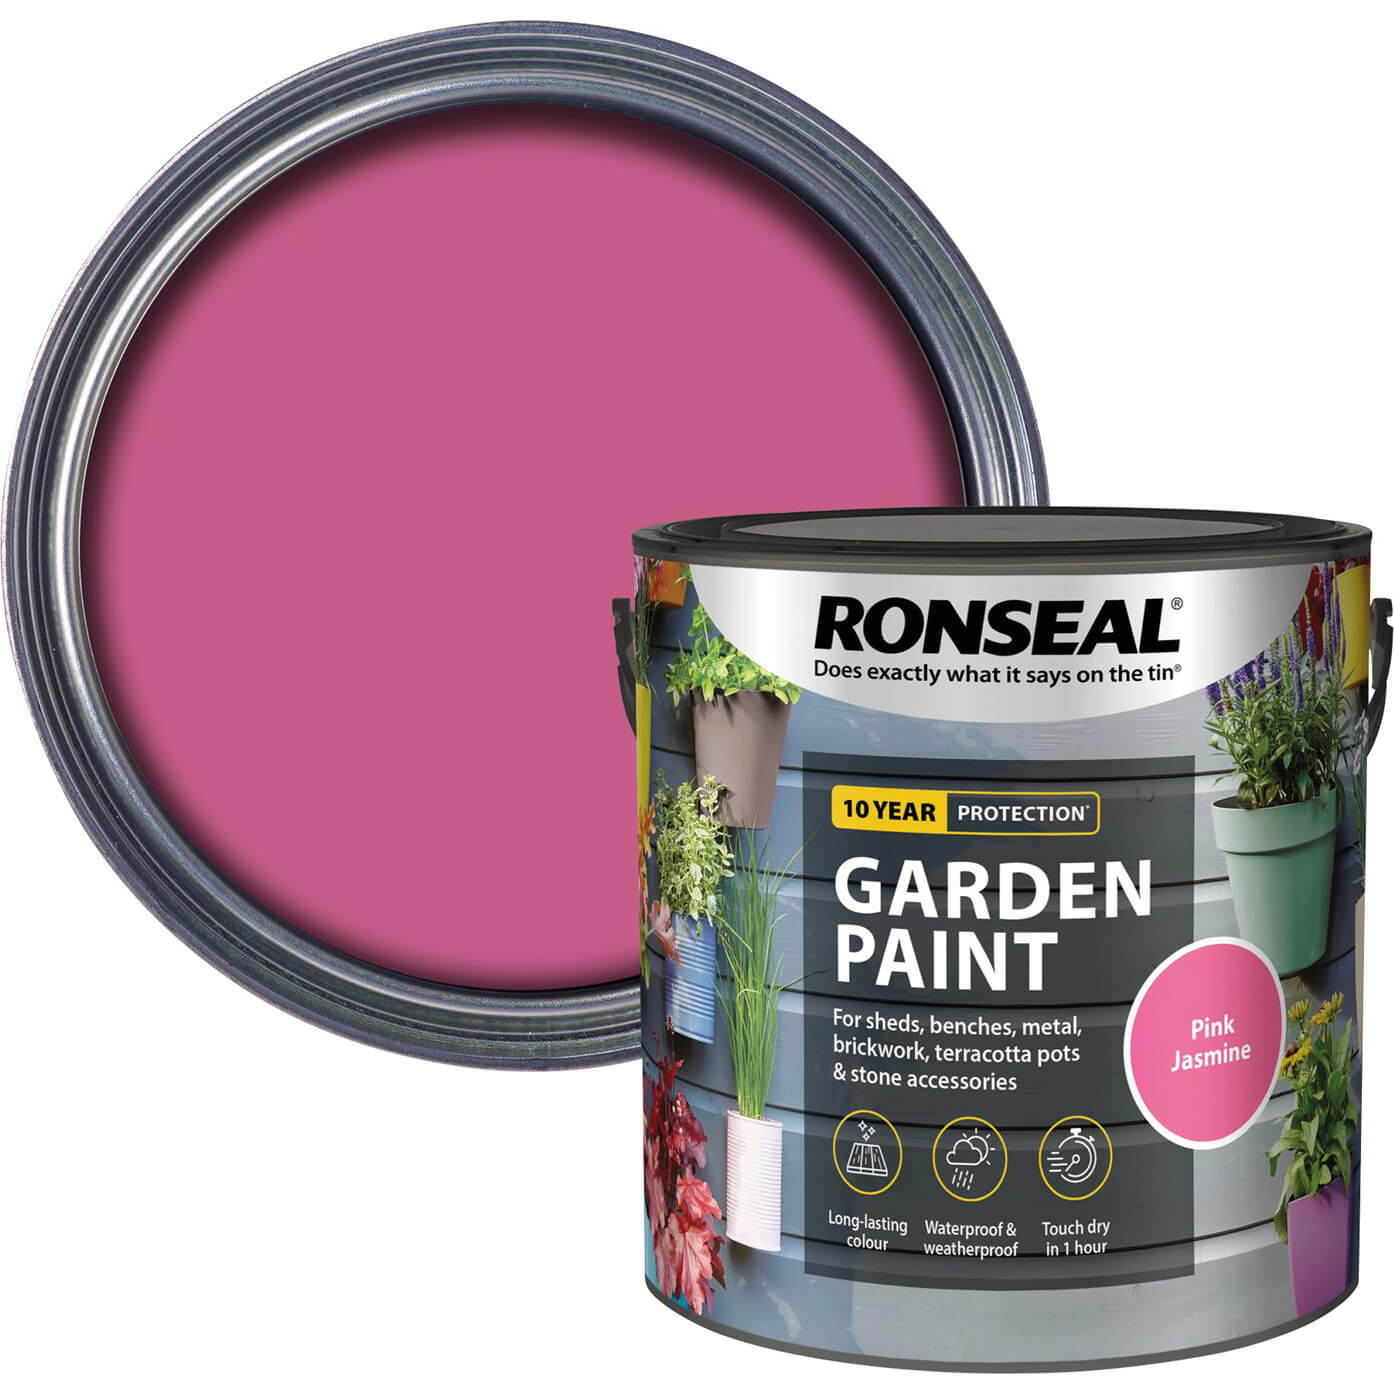 Ronseal General Purpose Garden Paint Pink Jasmine 2.5l